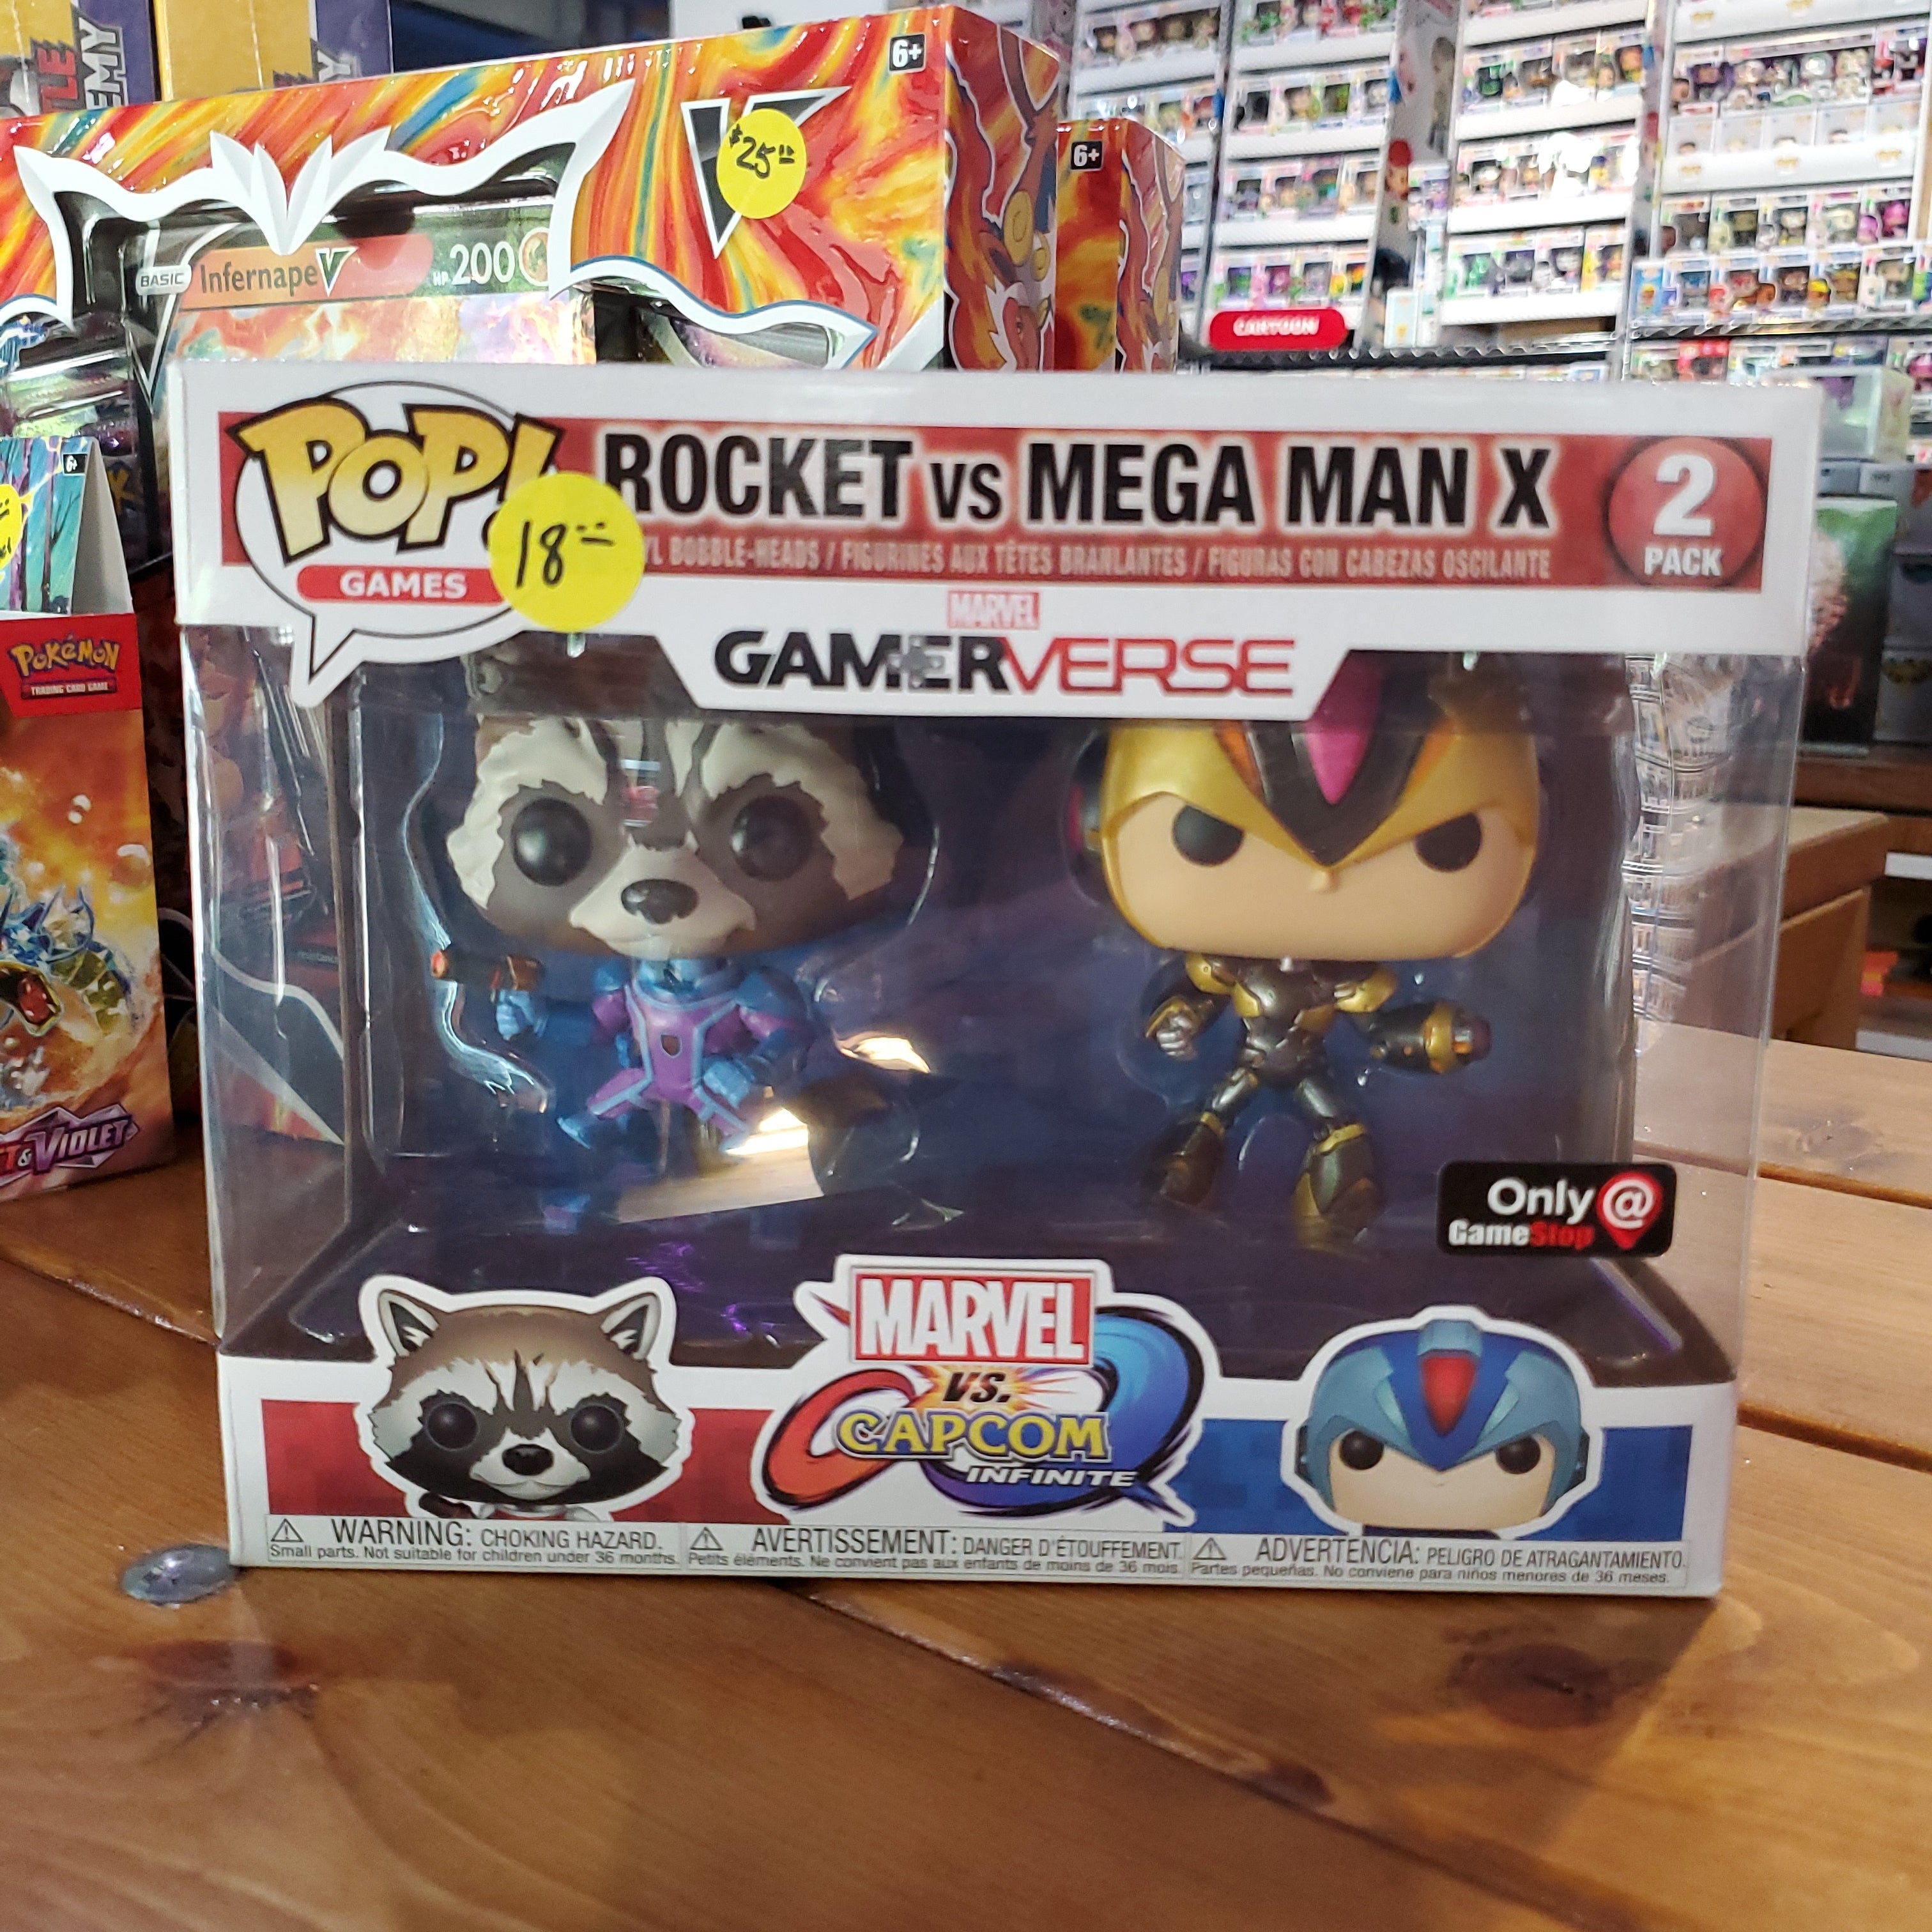 Marvel Gamerverse - Rocket vs. Mega Man X - Funko Pop Figure 2 